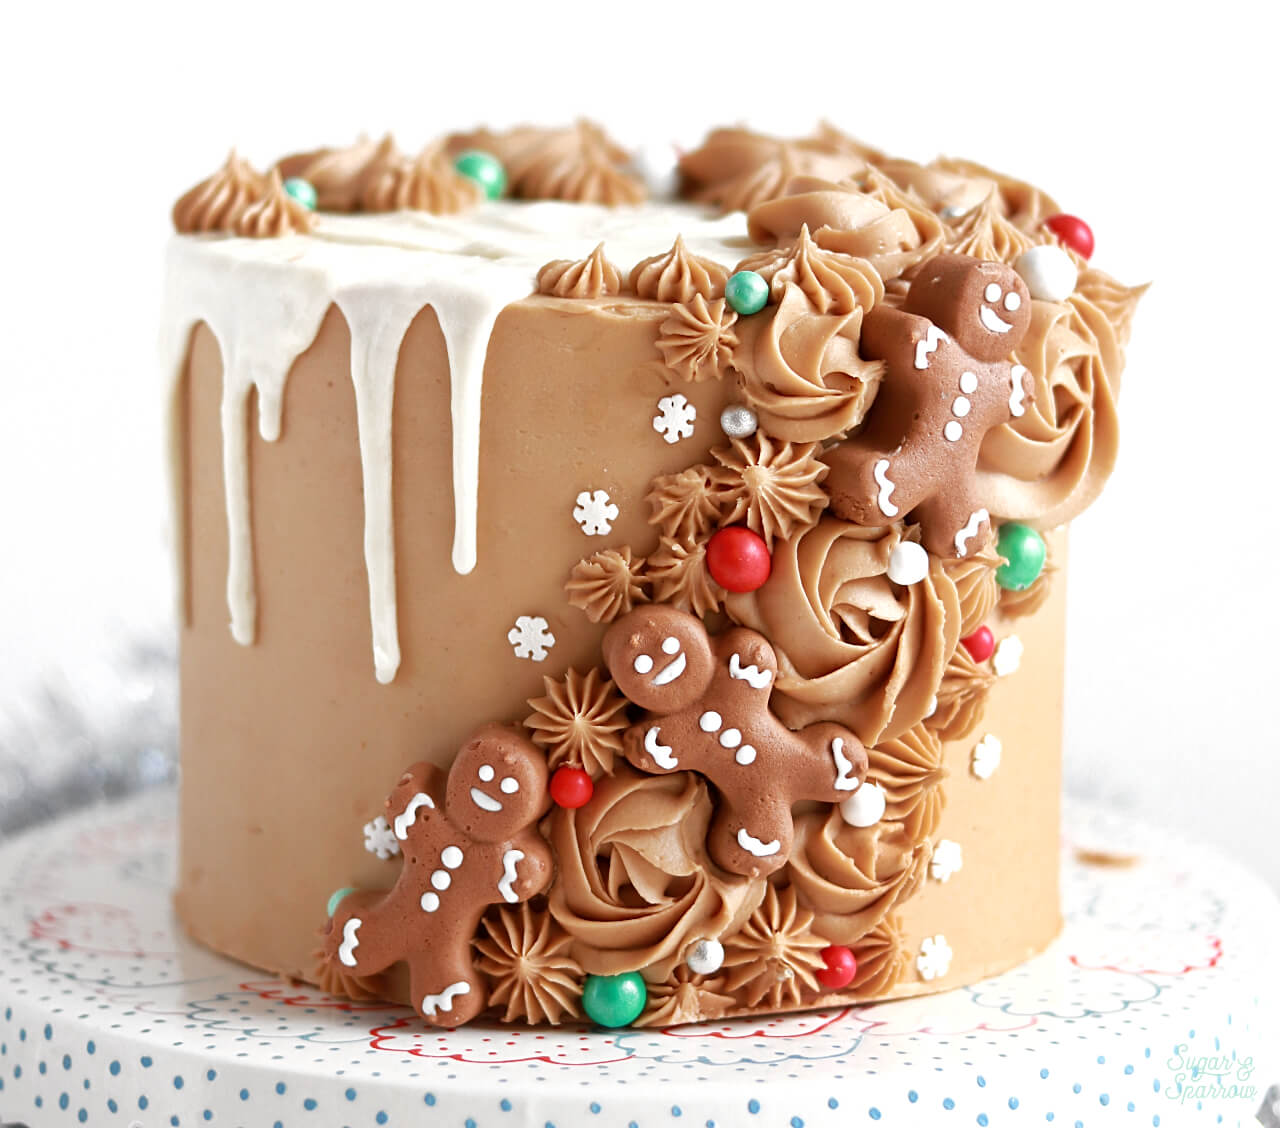 Gingerbread man Christmas cake